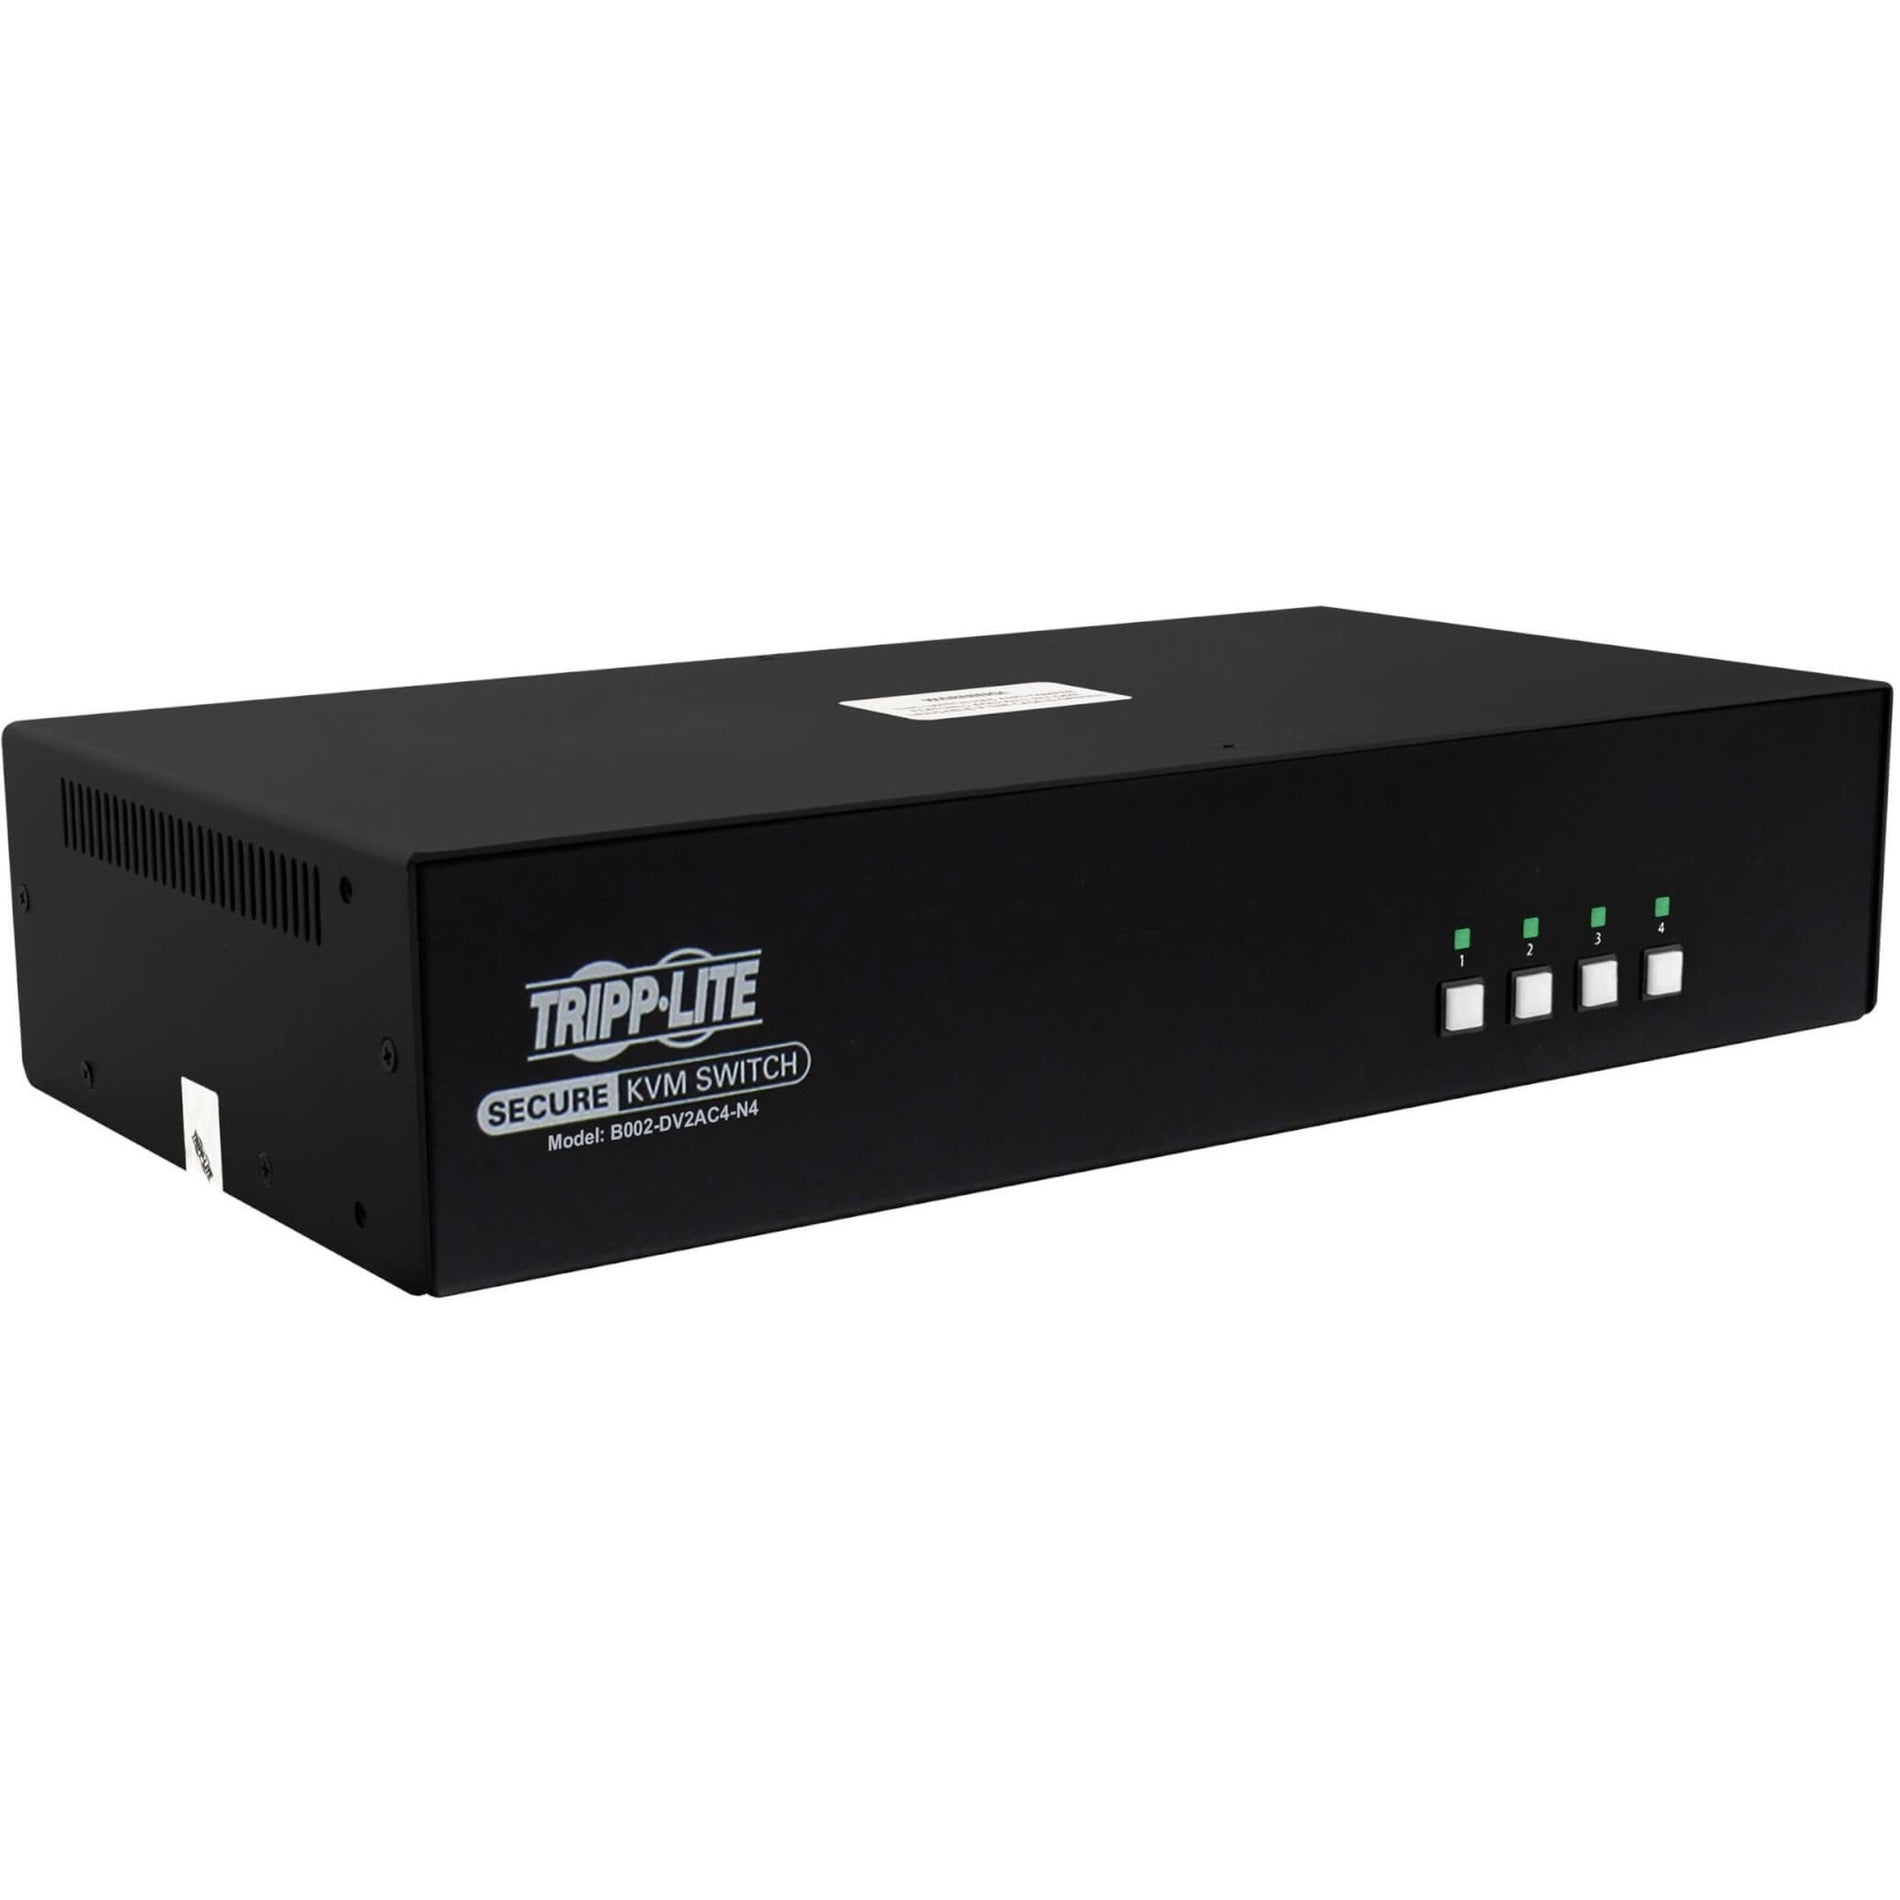 Tripp Lite B002-DV2AC4-N4 Secure KVM Switch, 4-Port, Dual Head, DVI to DVI, NIAP PP4.0, Audio, CAC, TAA